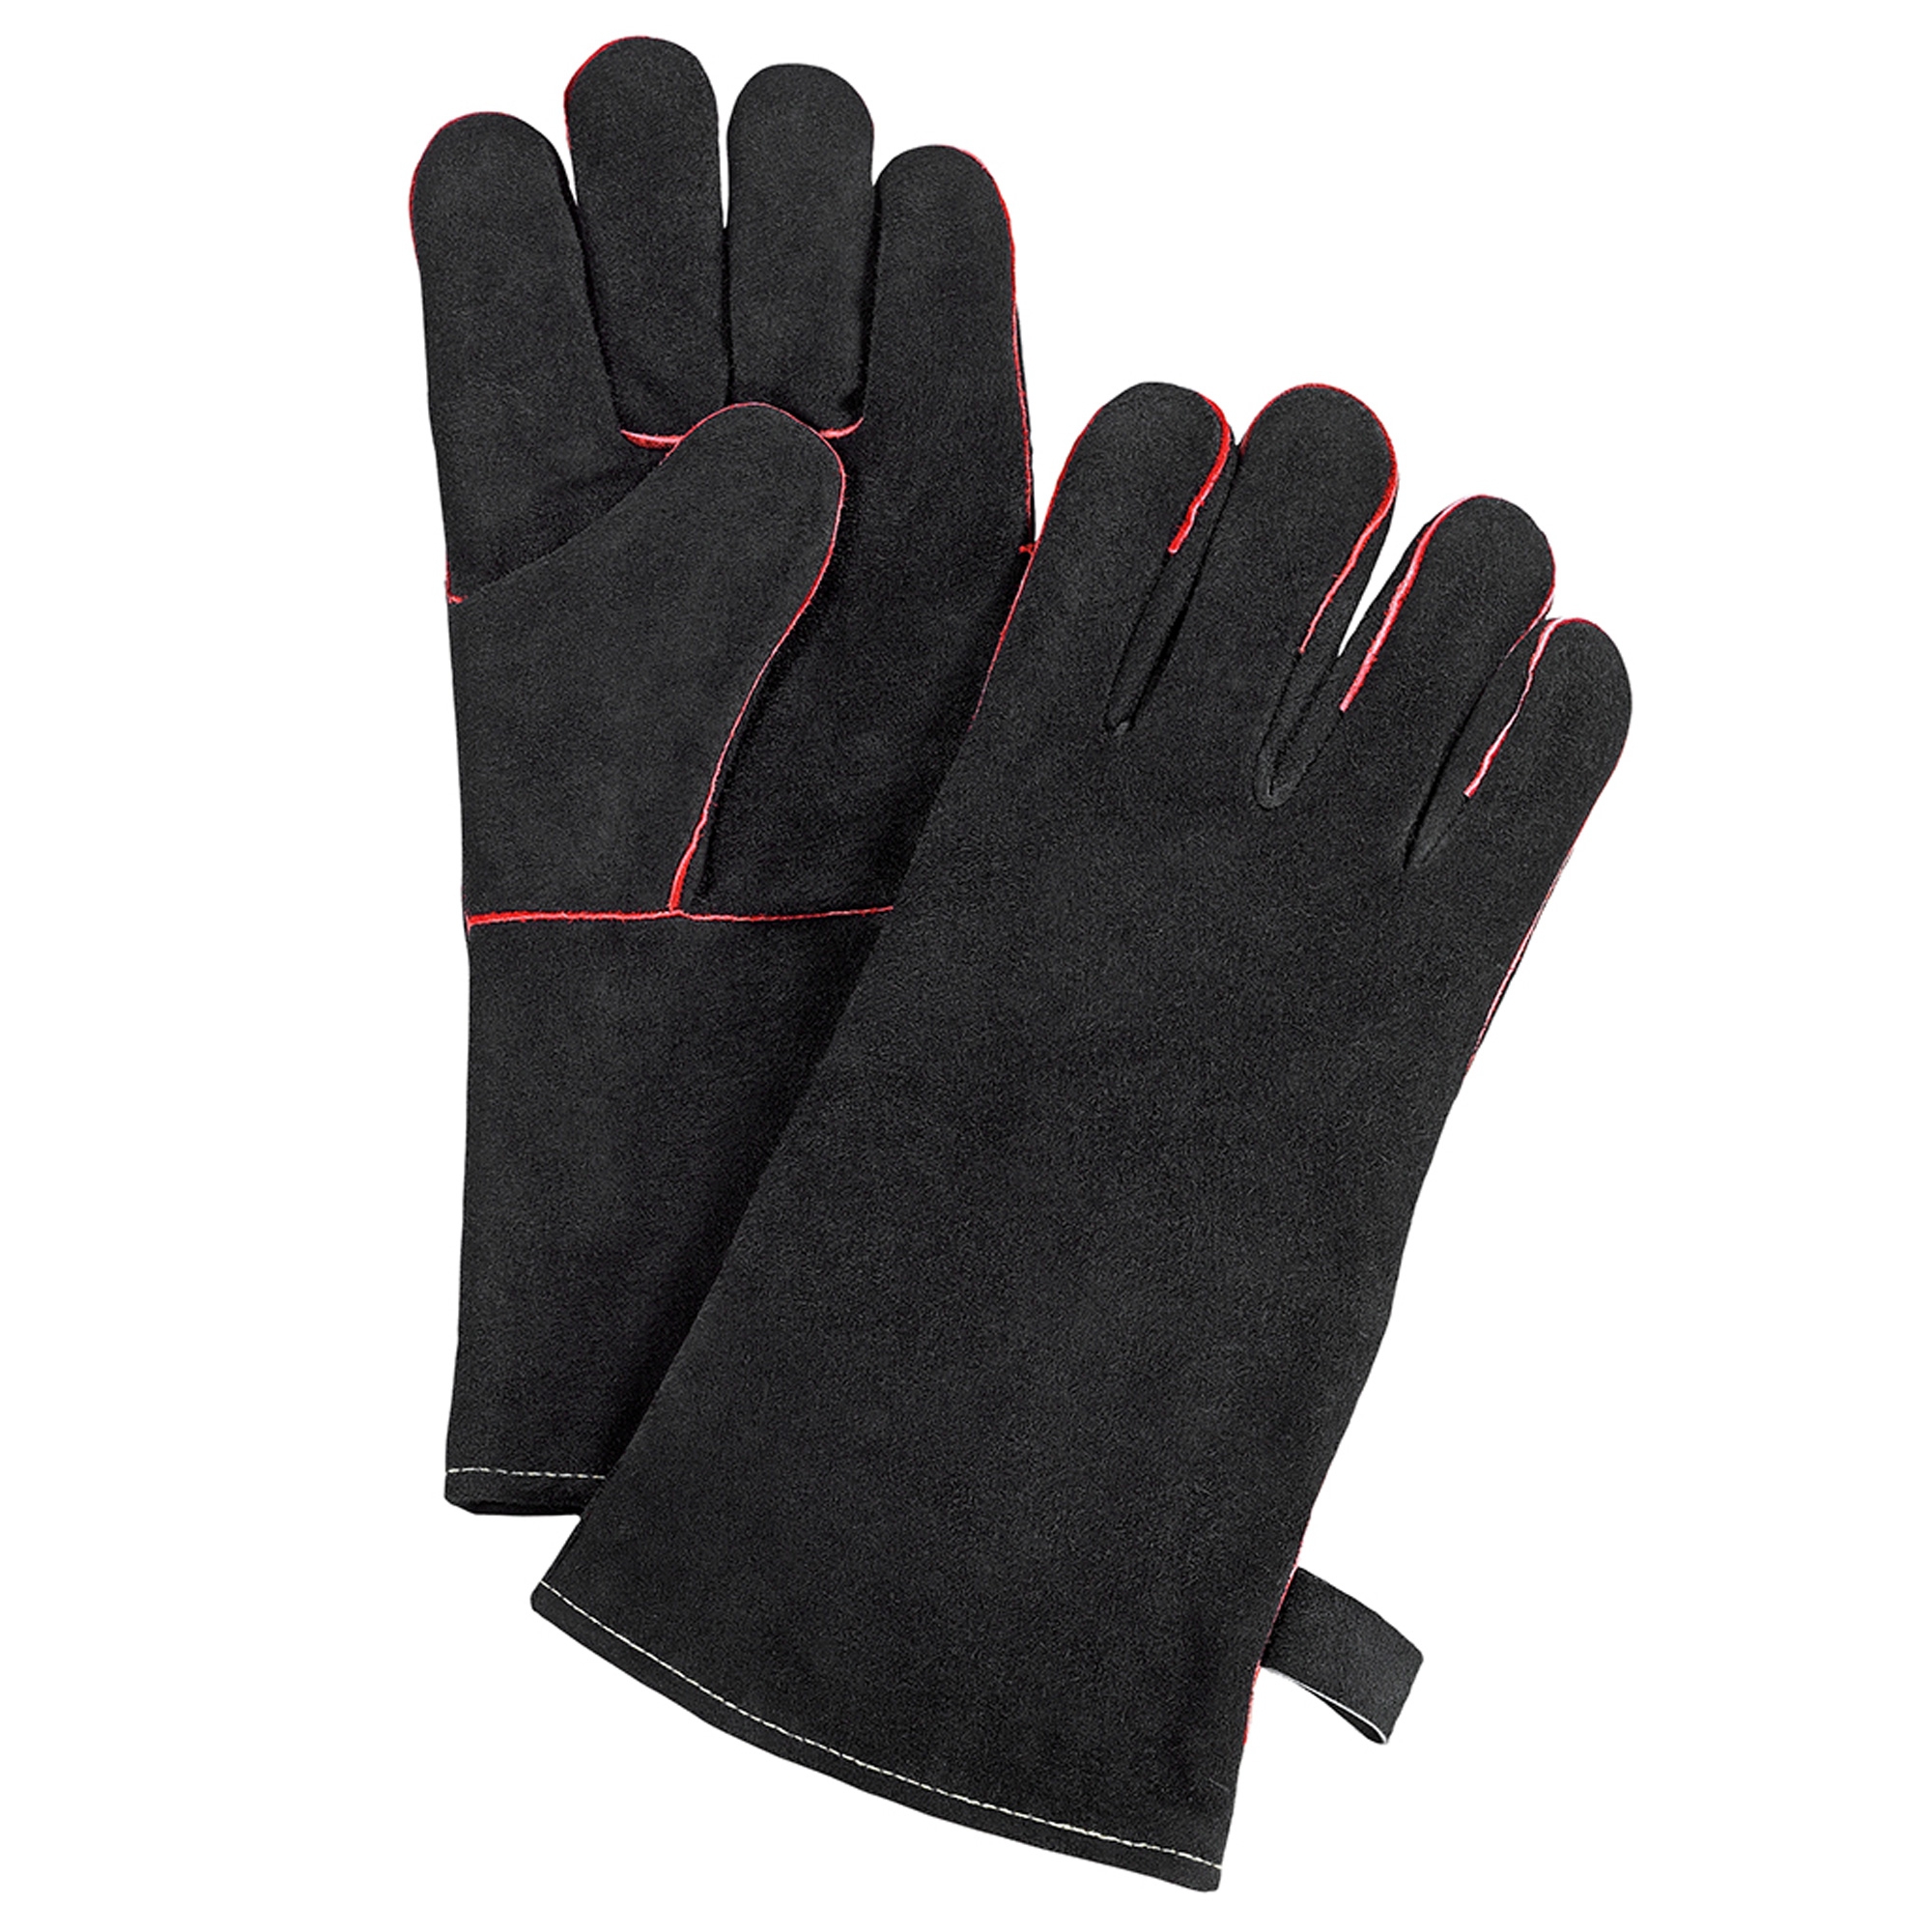 Küchenprofi - TEXAS barbecue gloves